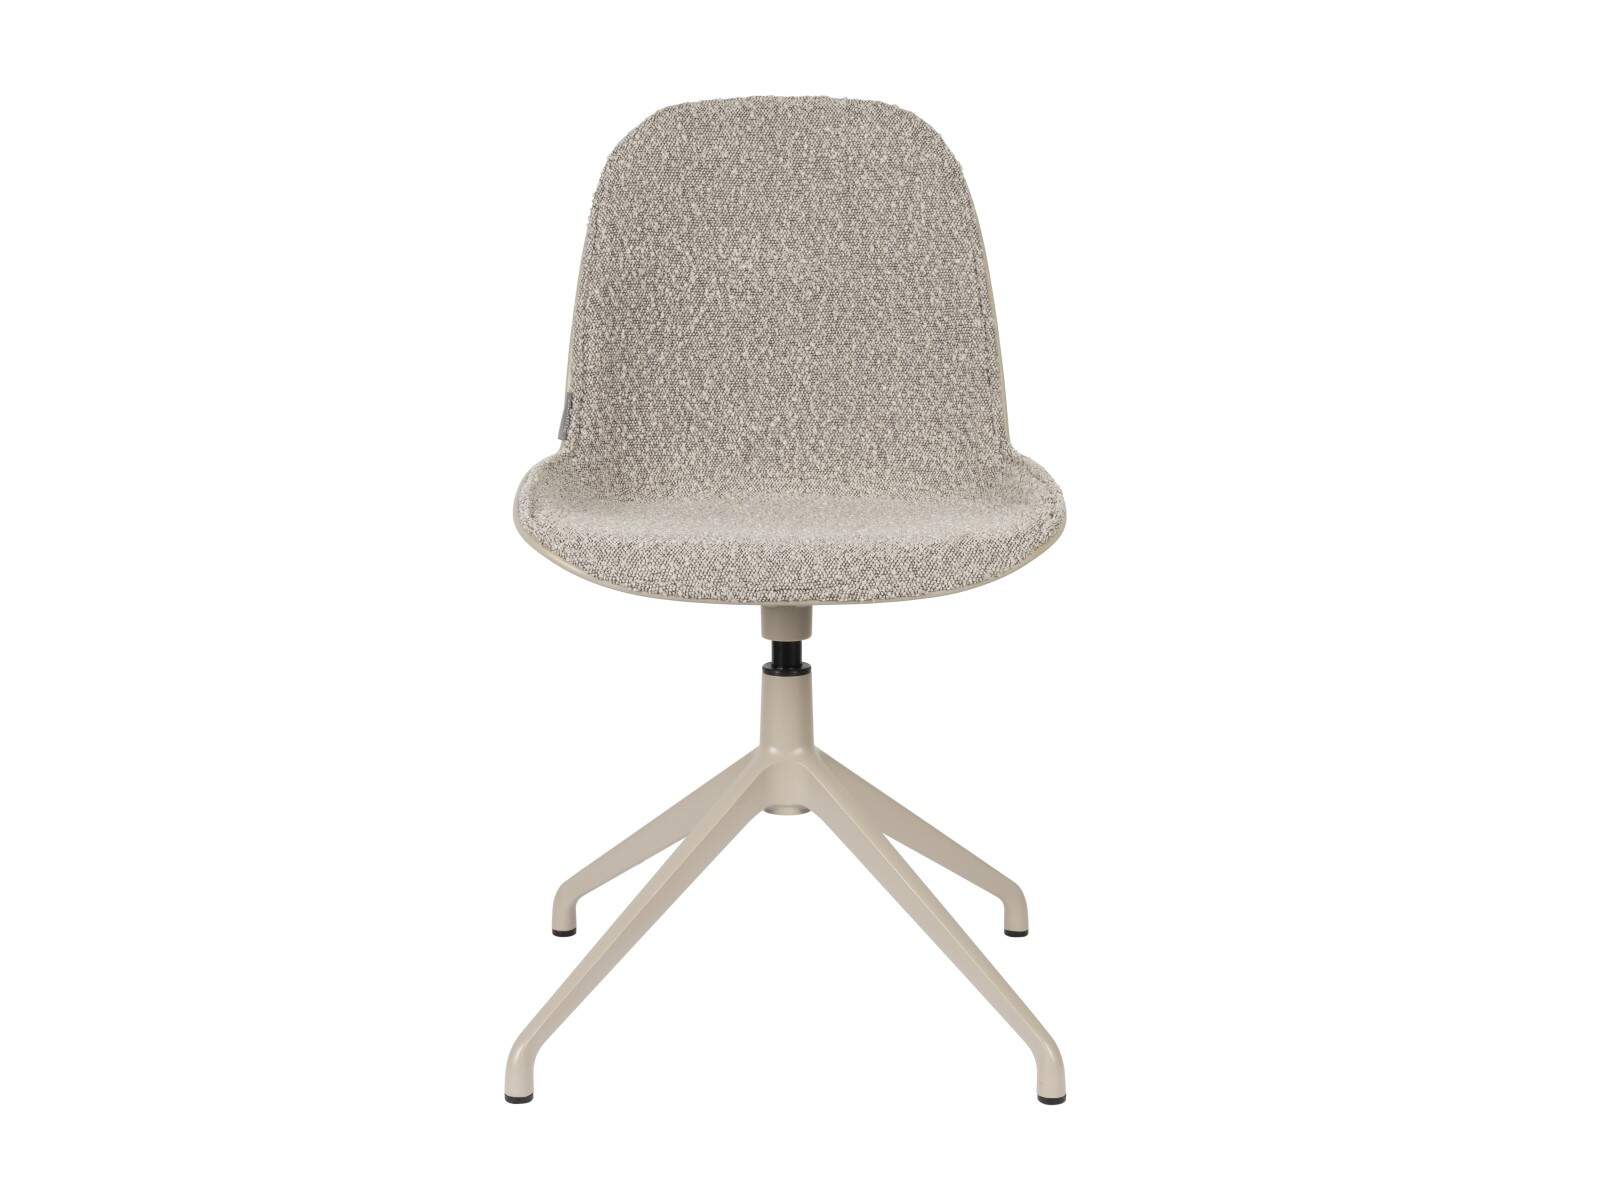 Zuiver Albert Kuip Office swivel chair taupe // Zuiver Albert Kuip Office irodai forgós szék taupe